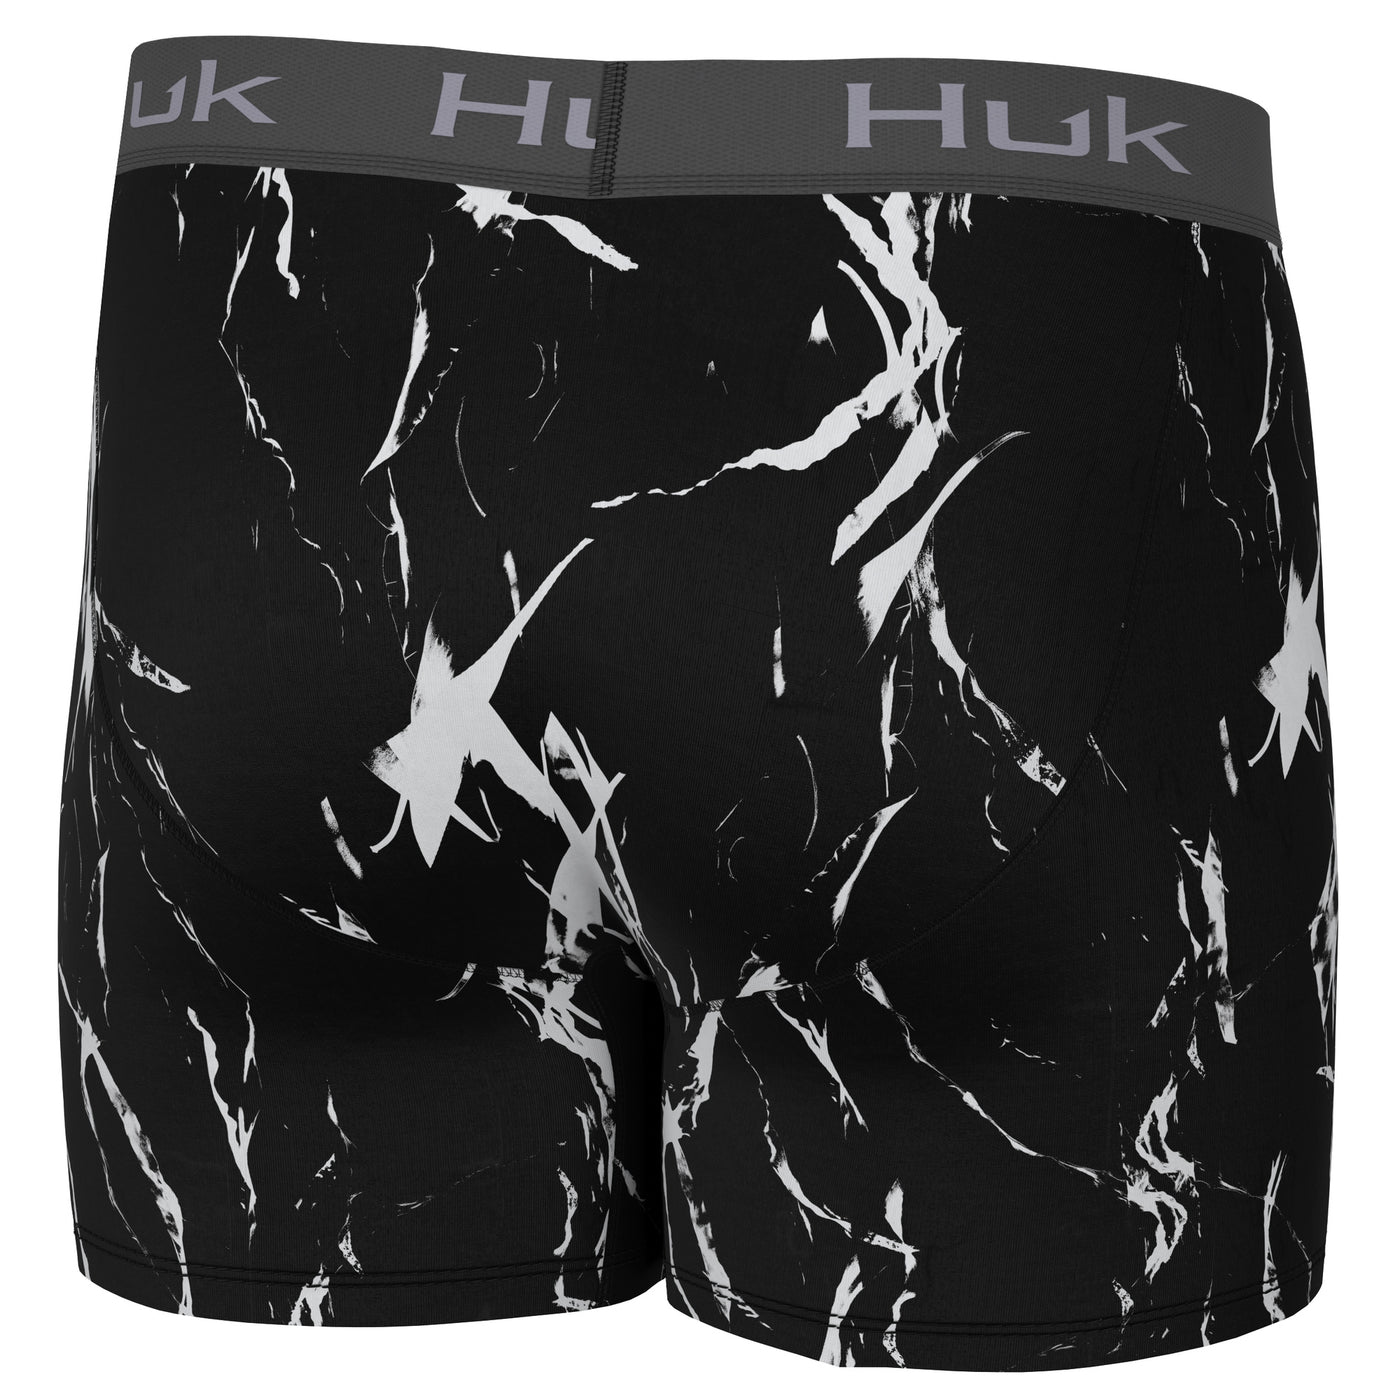 Huk Performance Boxer – Huk Gear